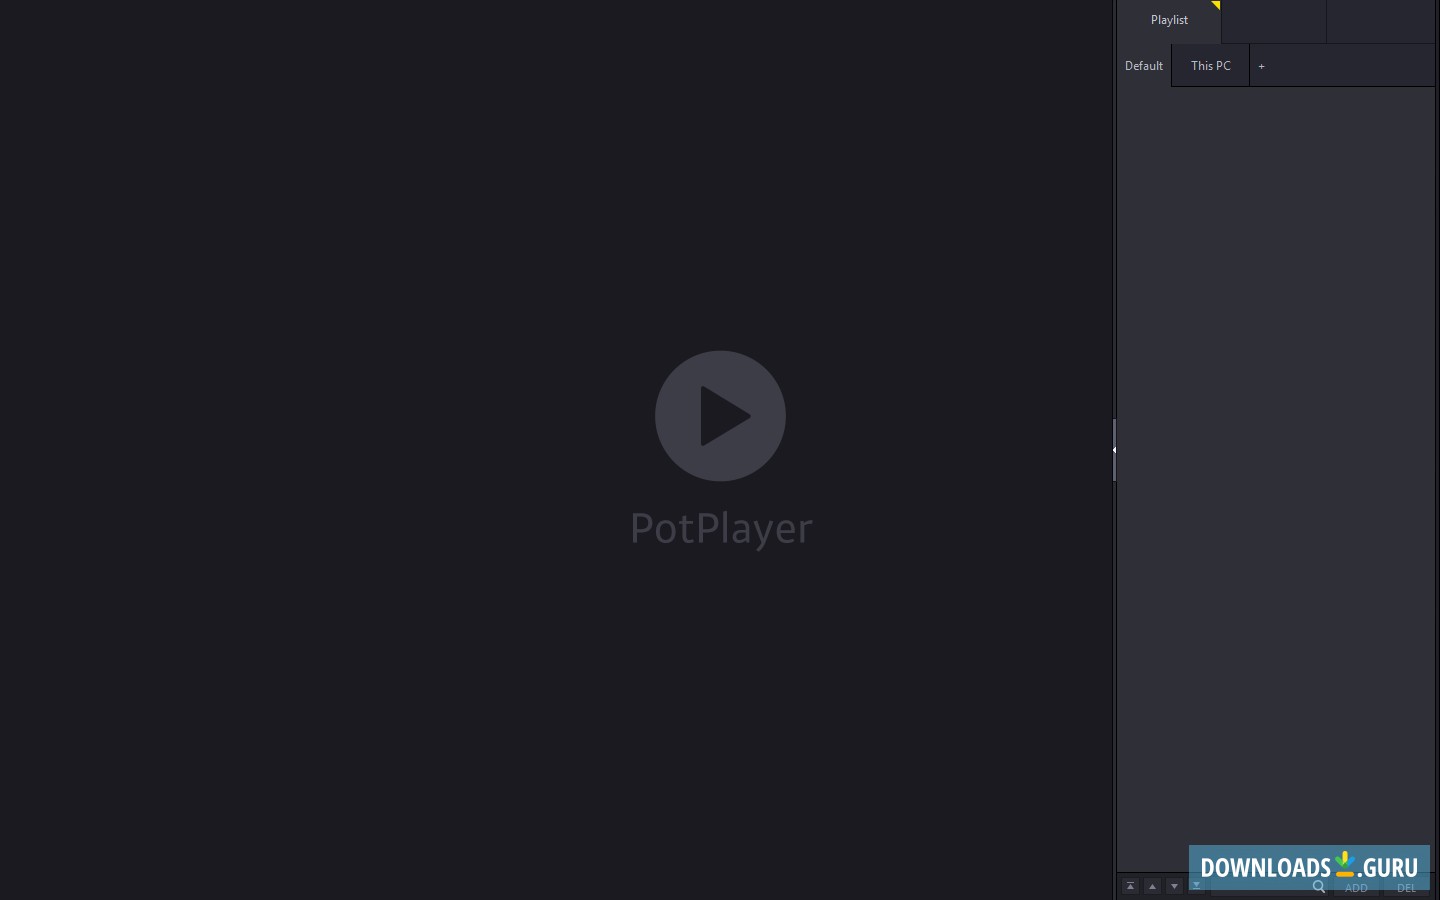 potplayer free download for windows 10